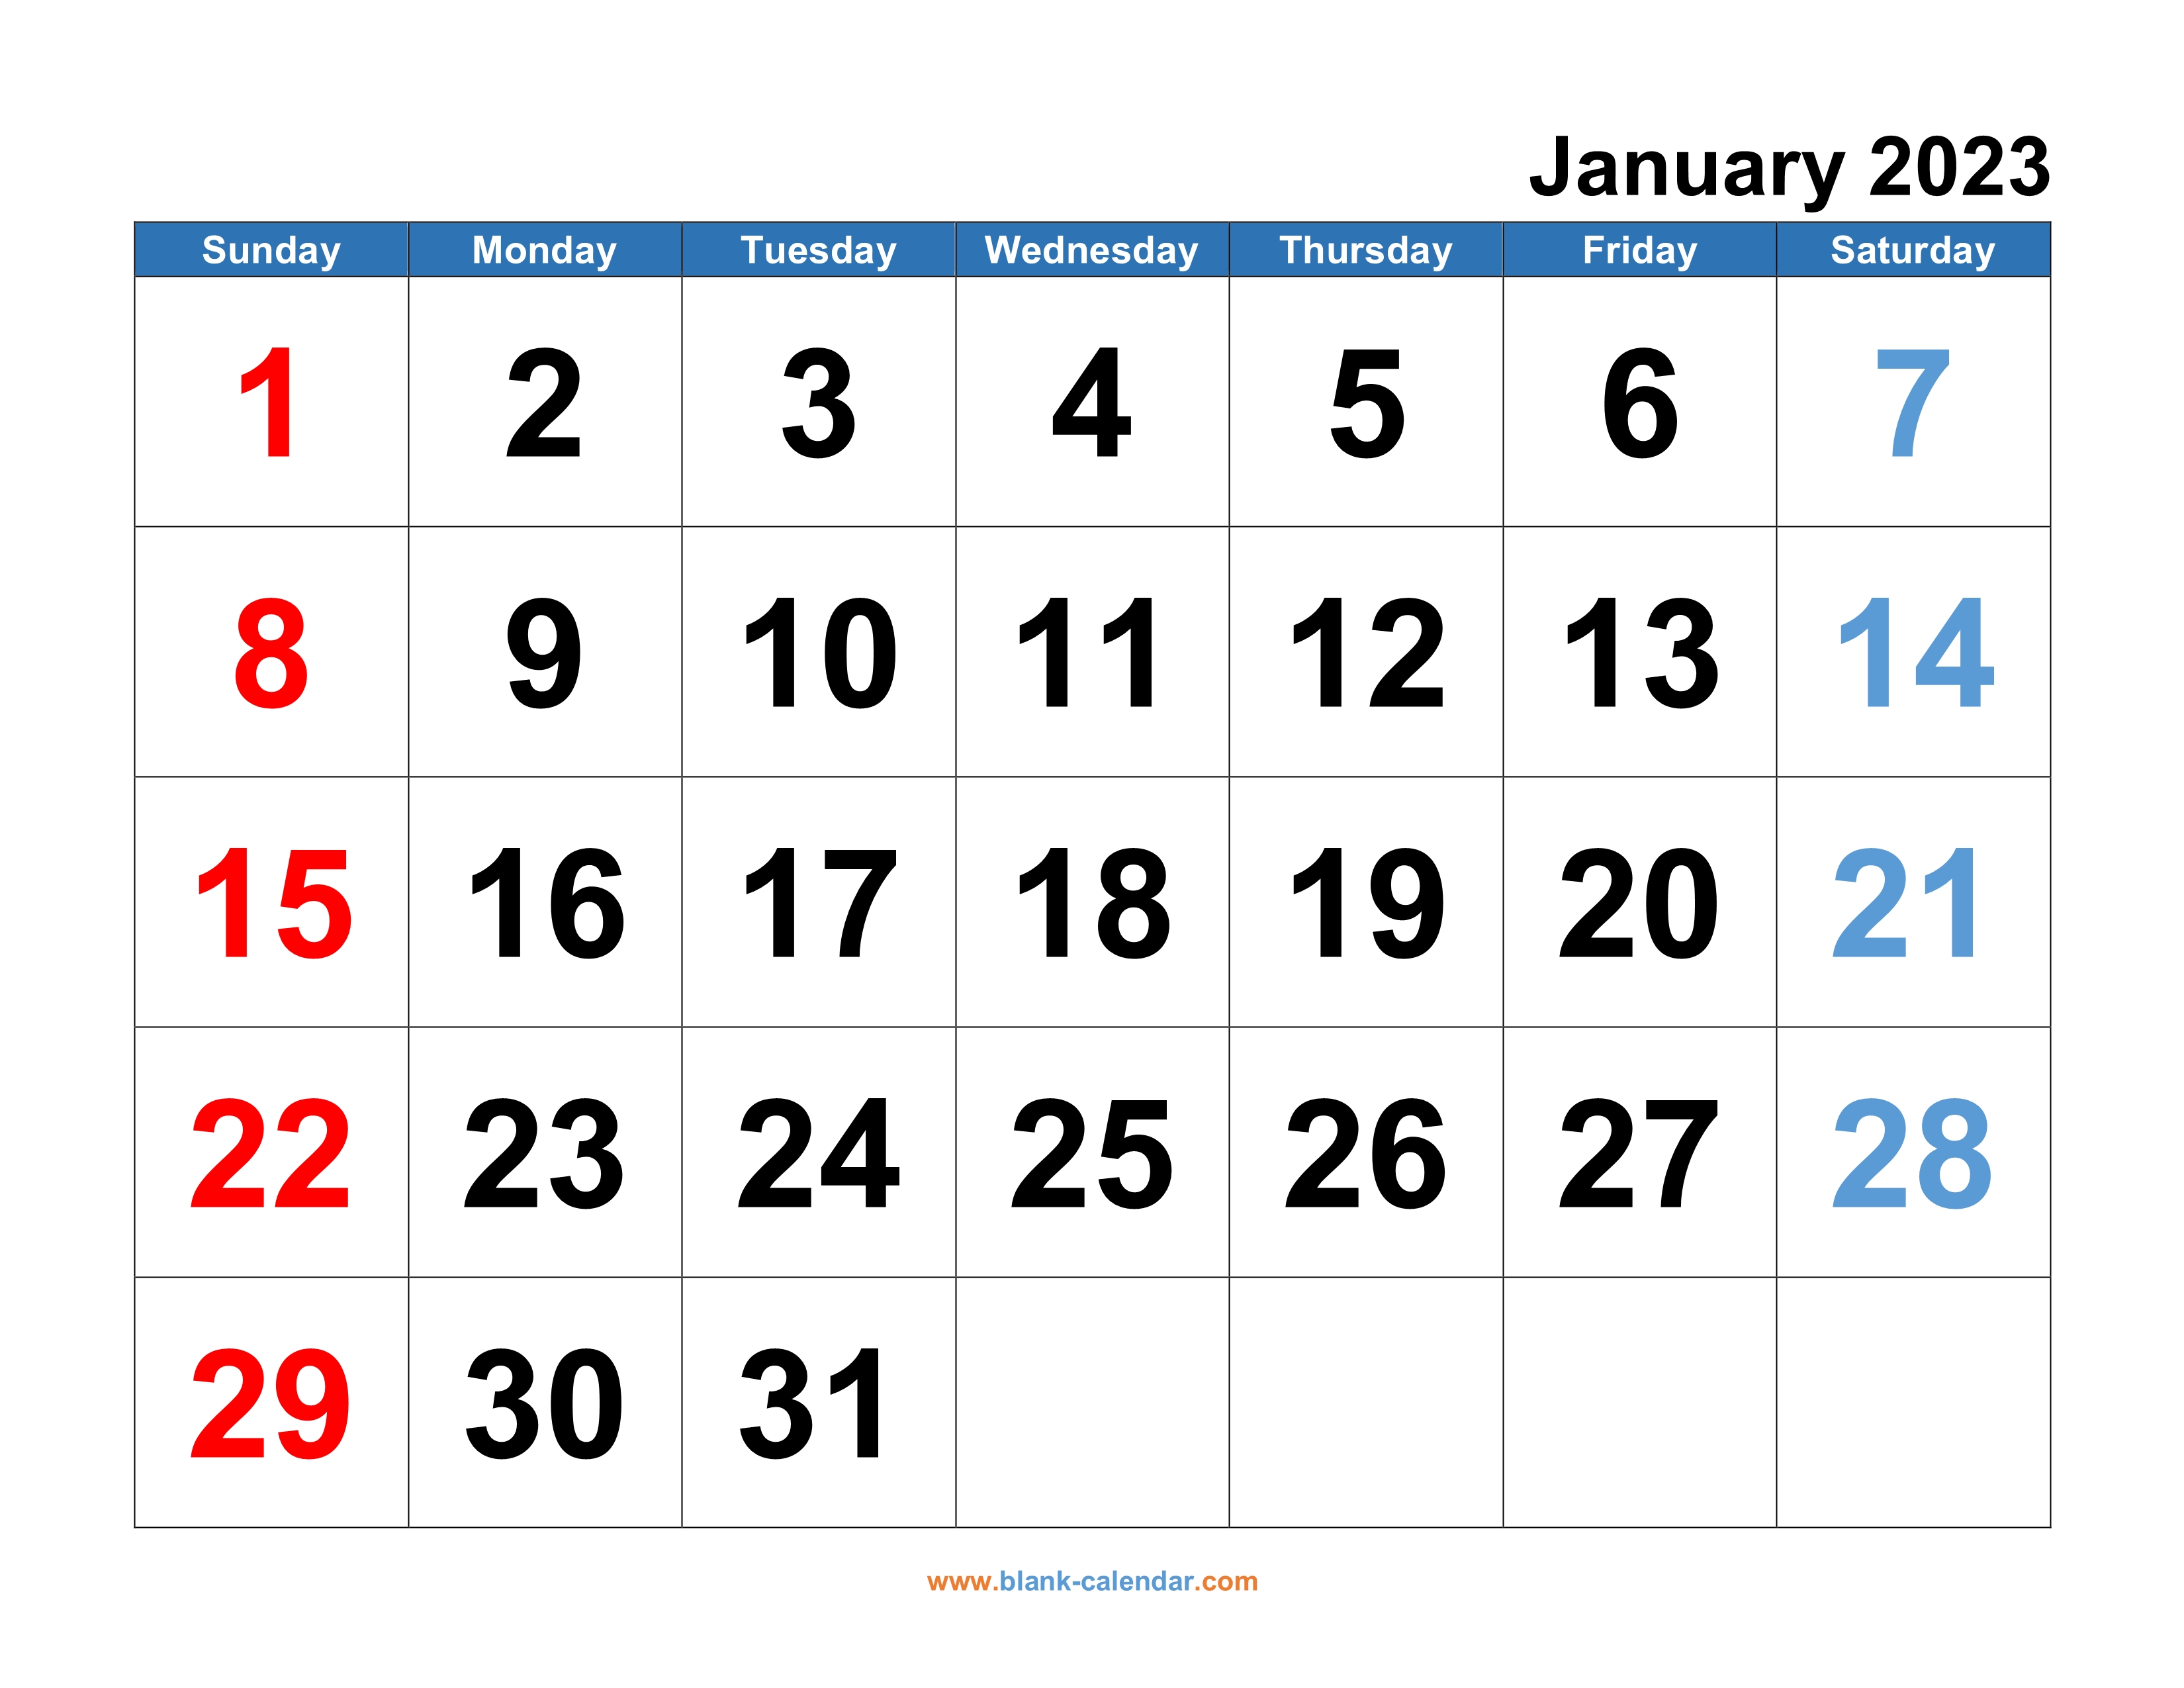 Calendar 2023 By Month Pdf Get Calendar 2023 Update